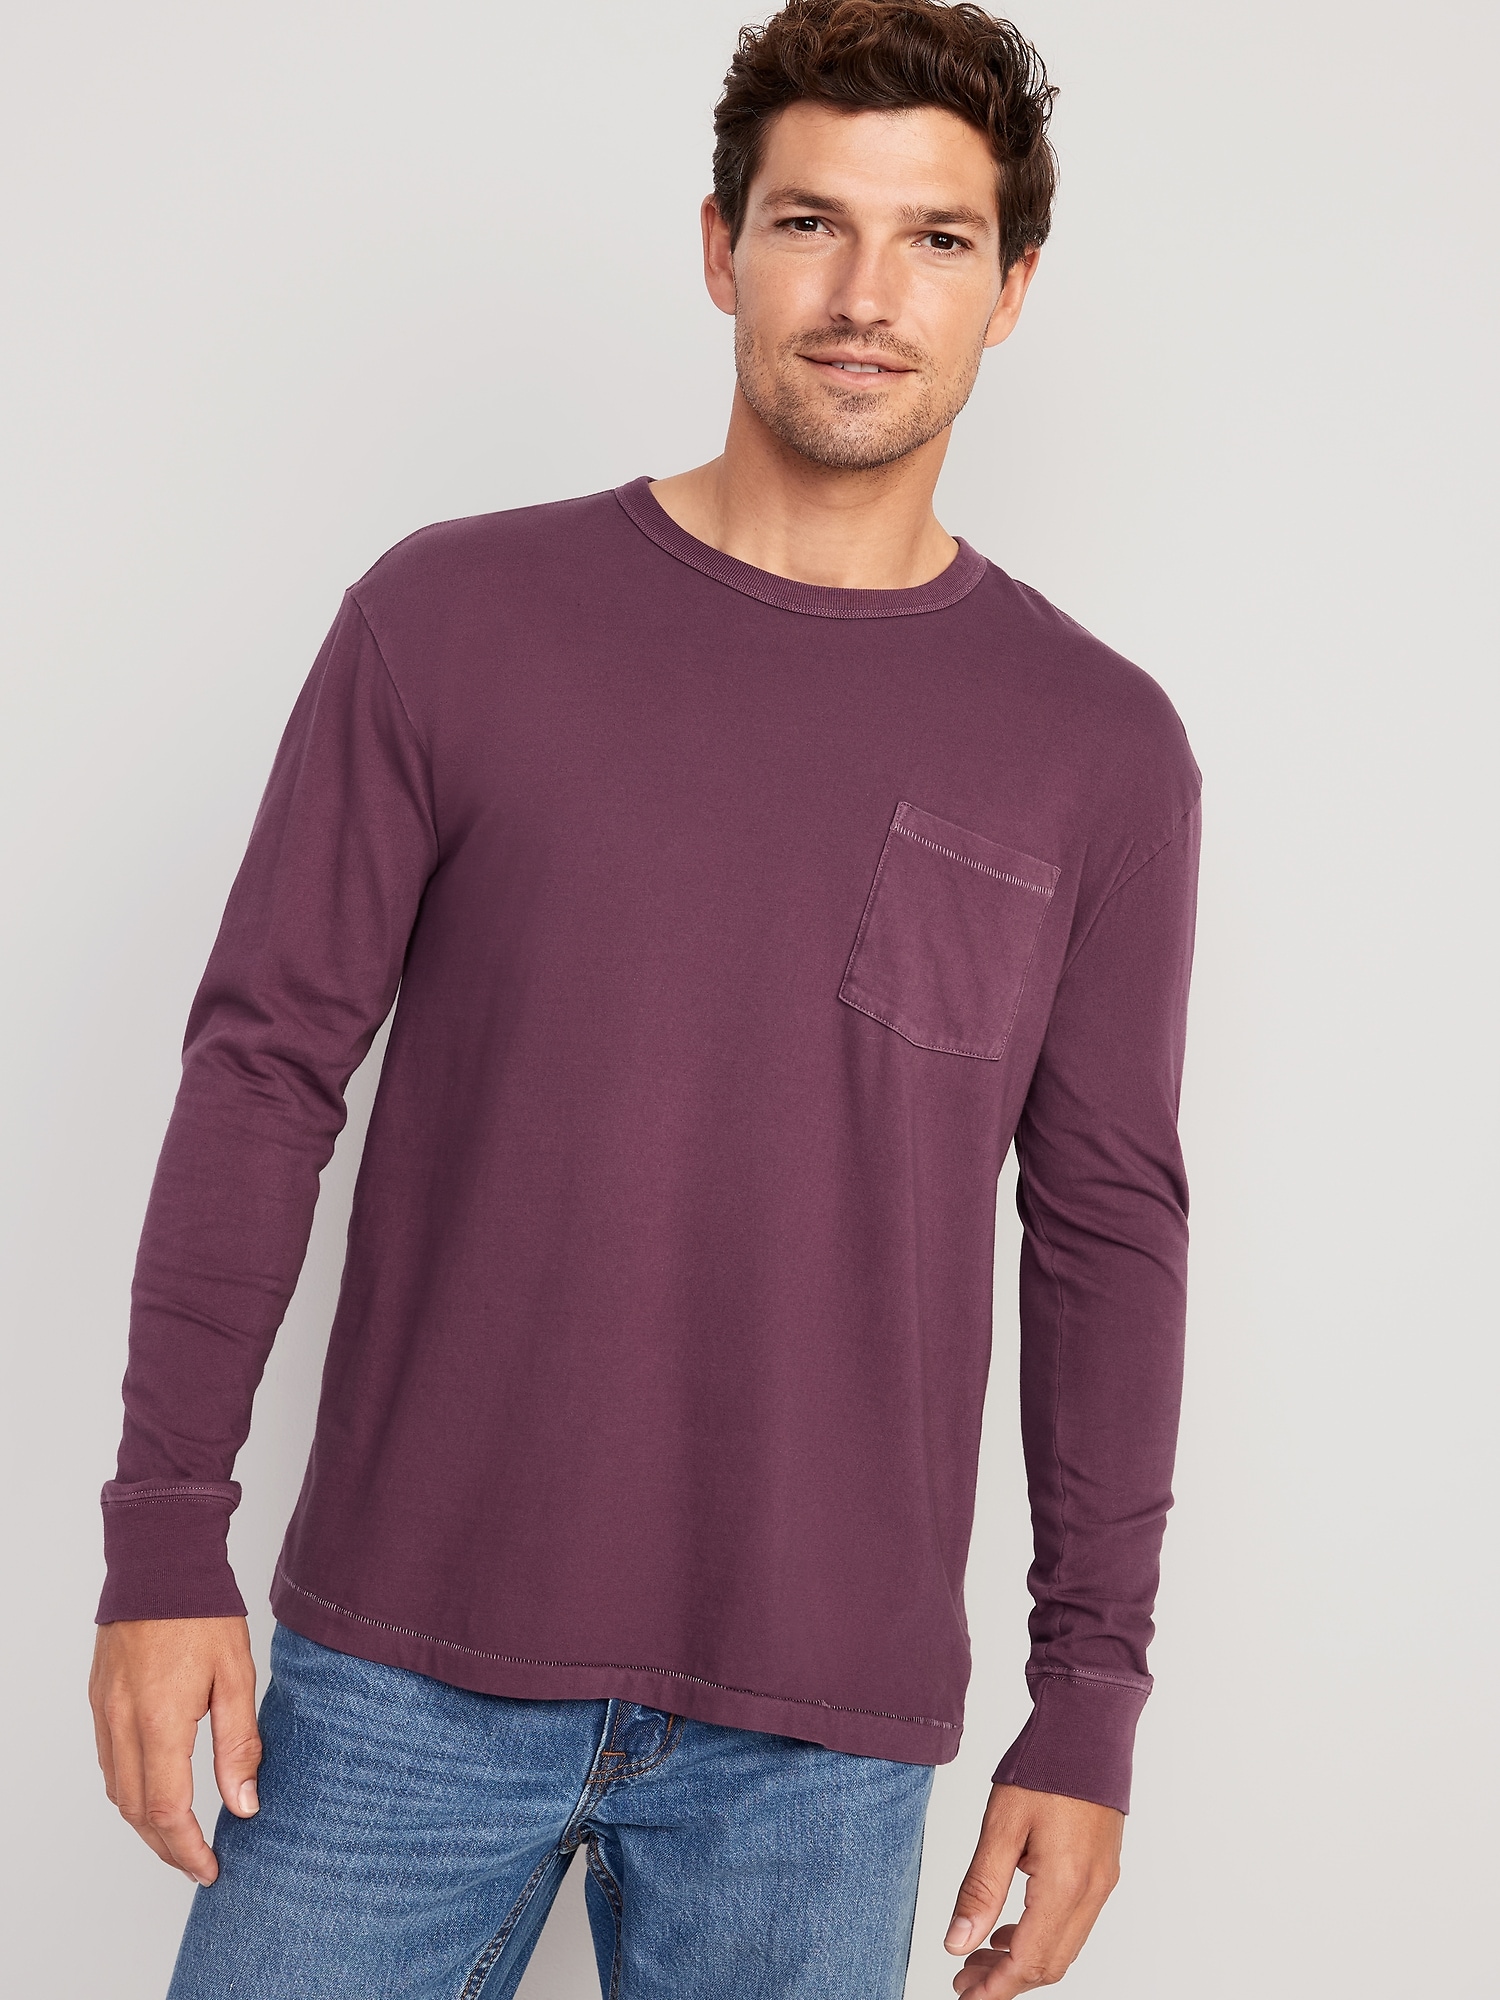 Vintage Garment-Dyed Long-Sleeve T-Shirt for Men